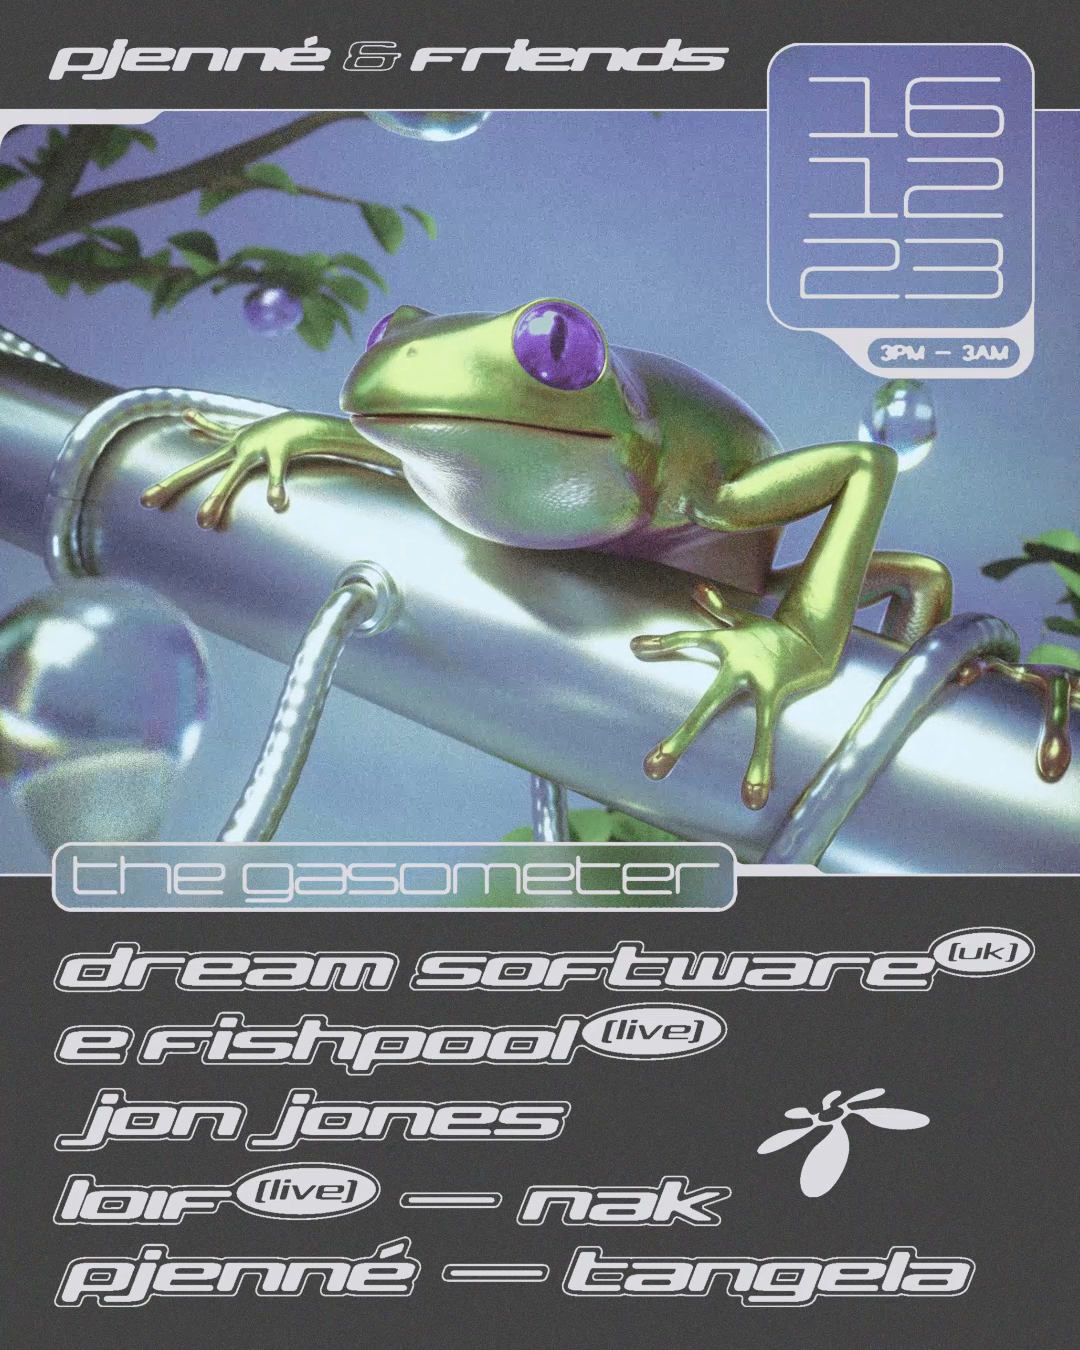 Pjenné & Friends: Dream Software [UK], Efishpool [Live], Jon Jones, LOIF [Live], Nak, Tangela - フライヤー表